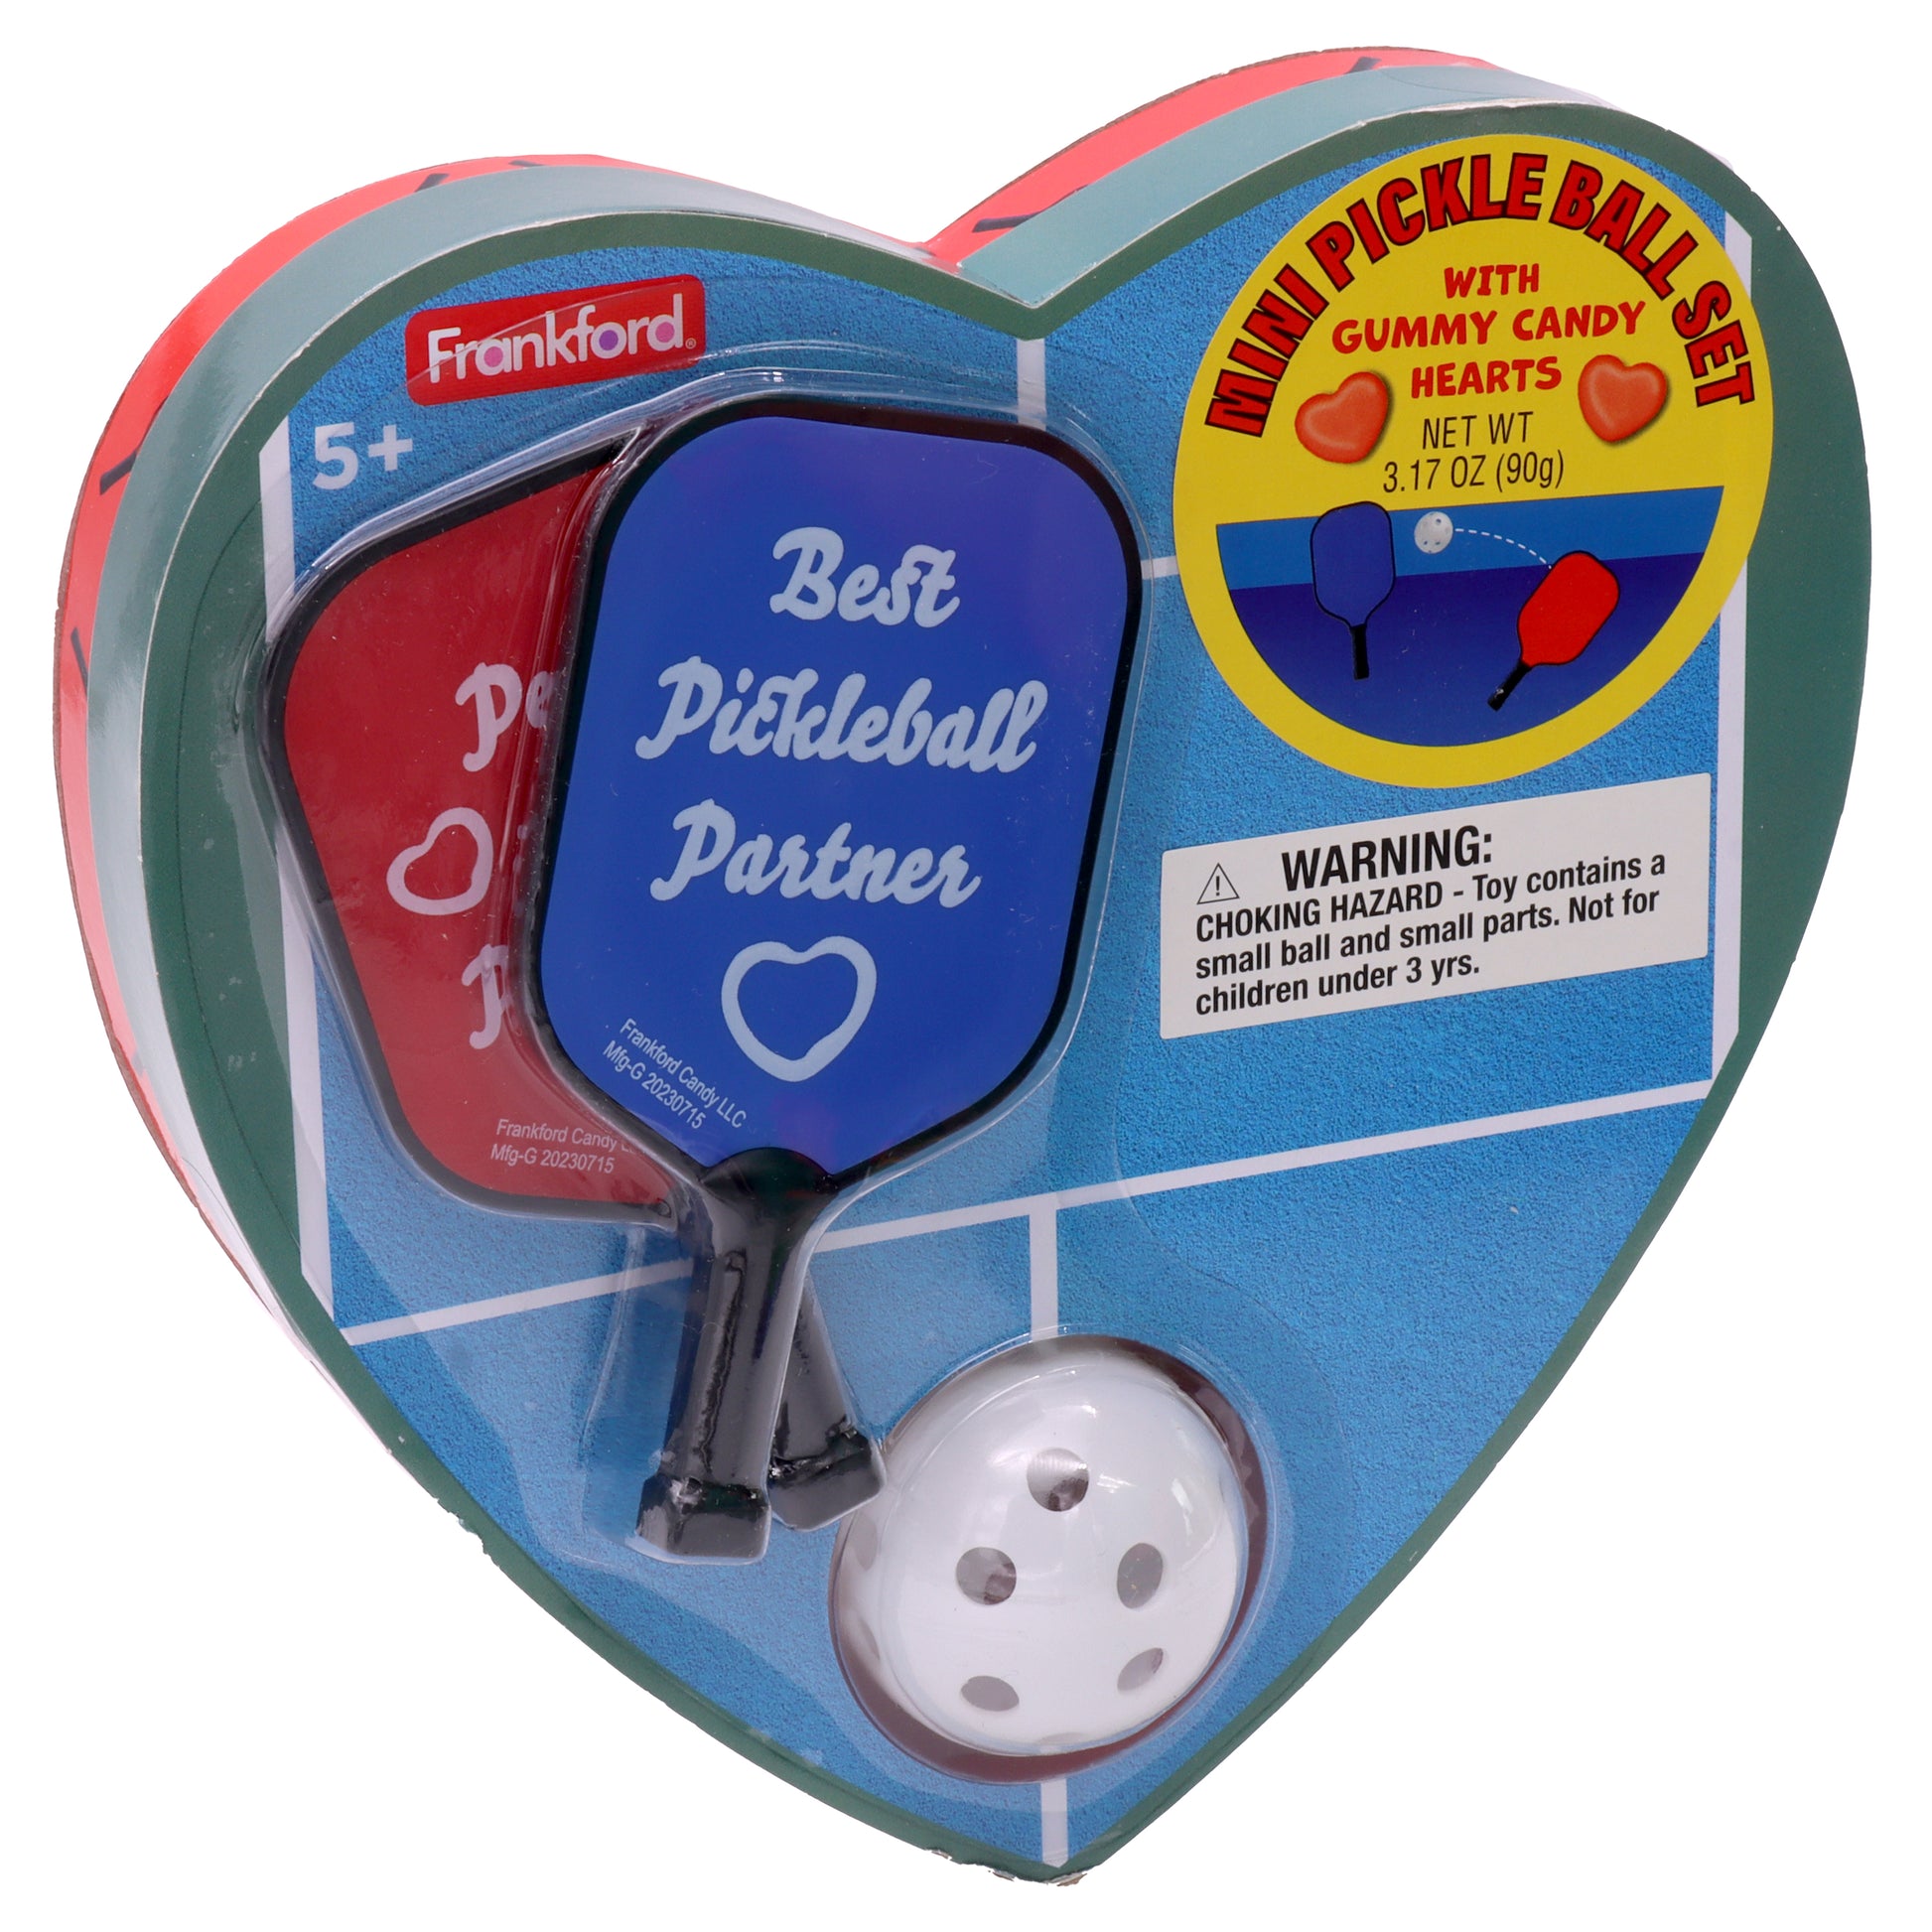 Frankford Pickle Ball Valentine's Heart Box with Gummy Hearts 3.17oz, Size: 3.17 oz